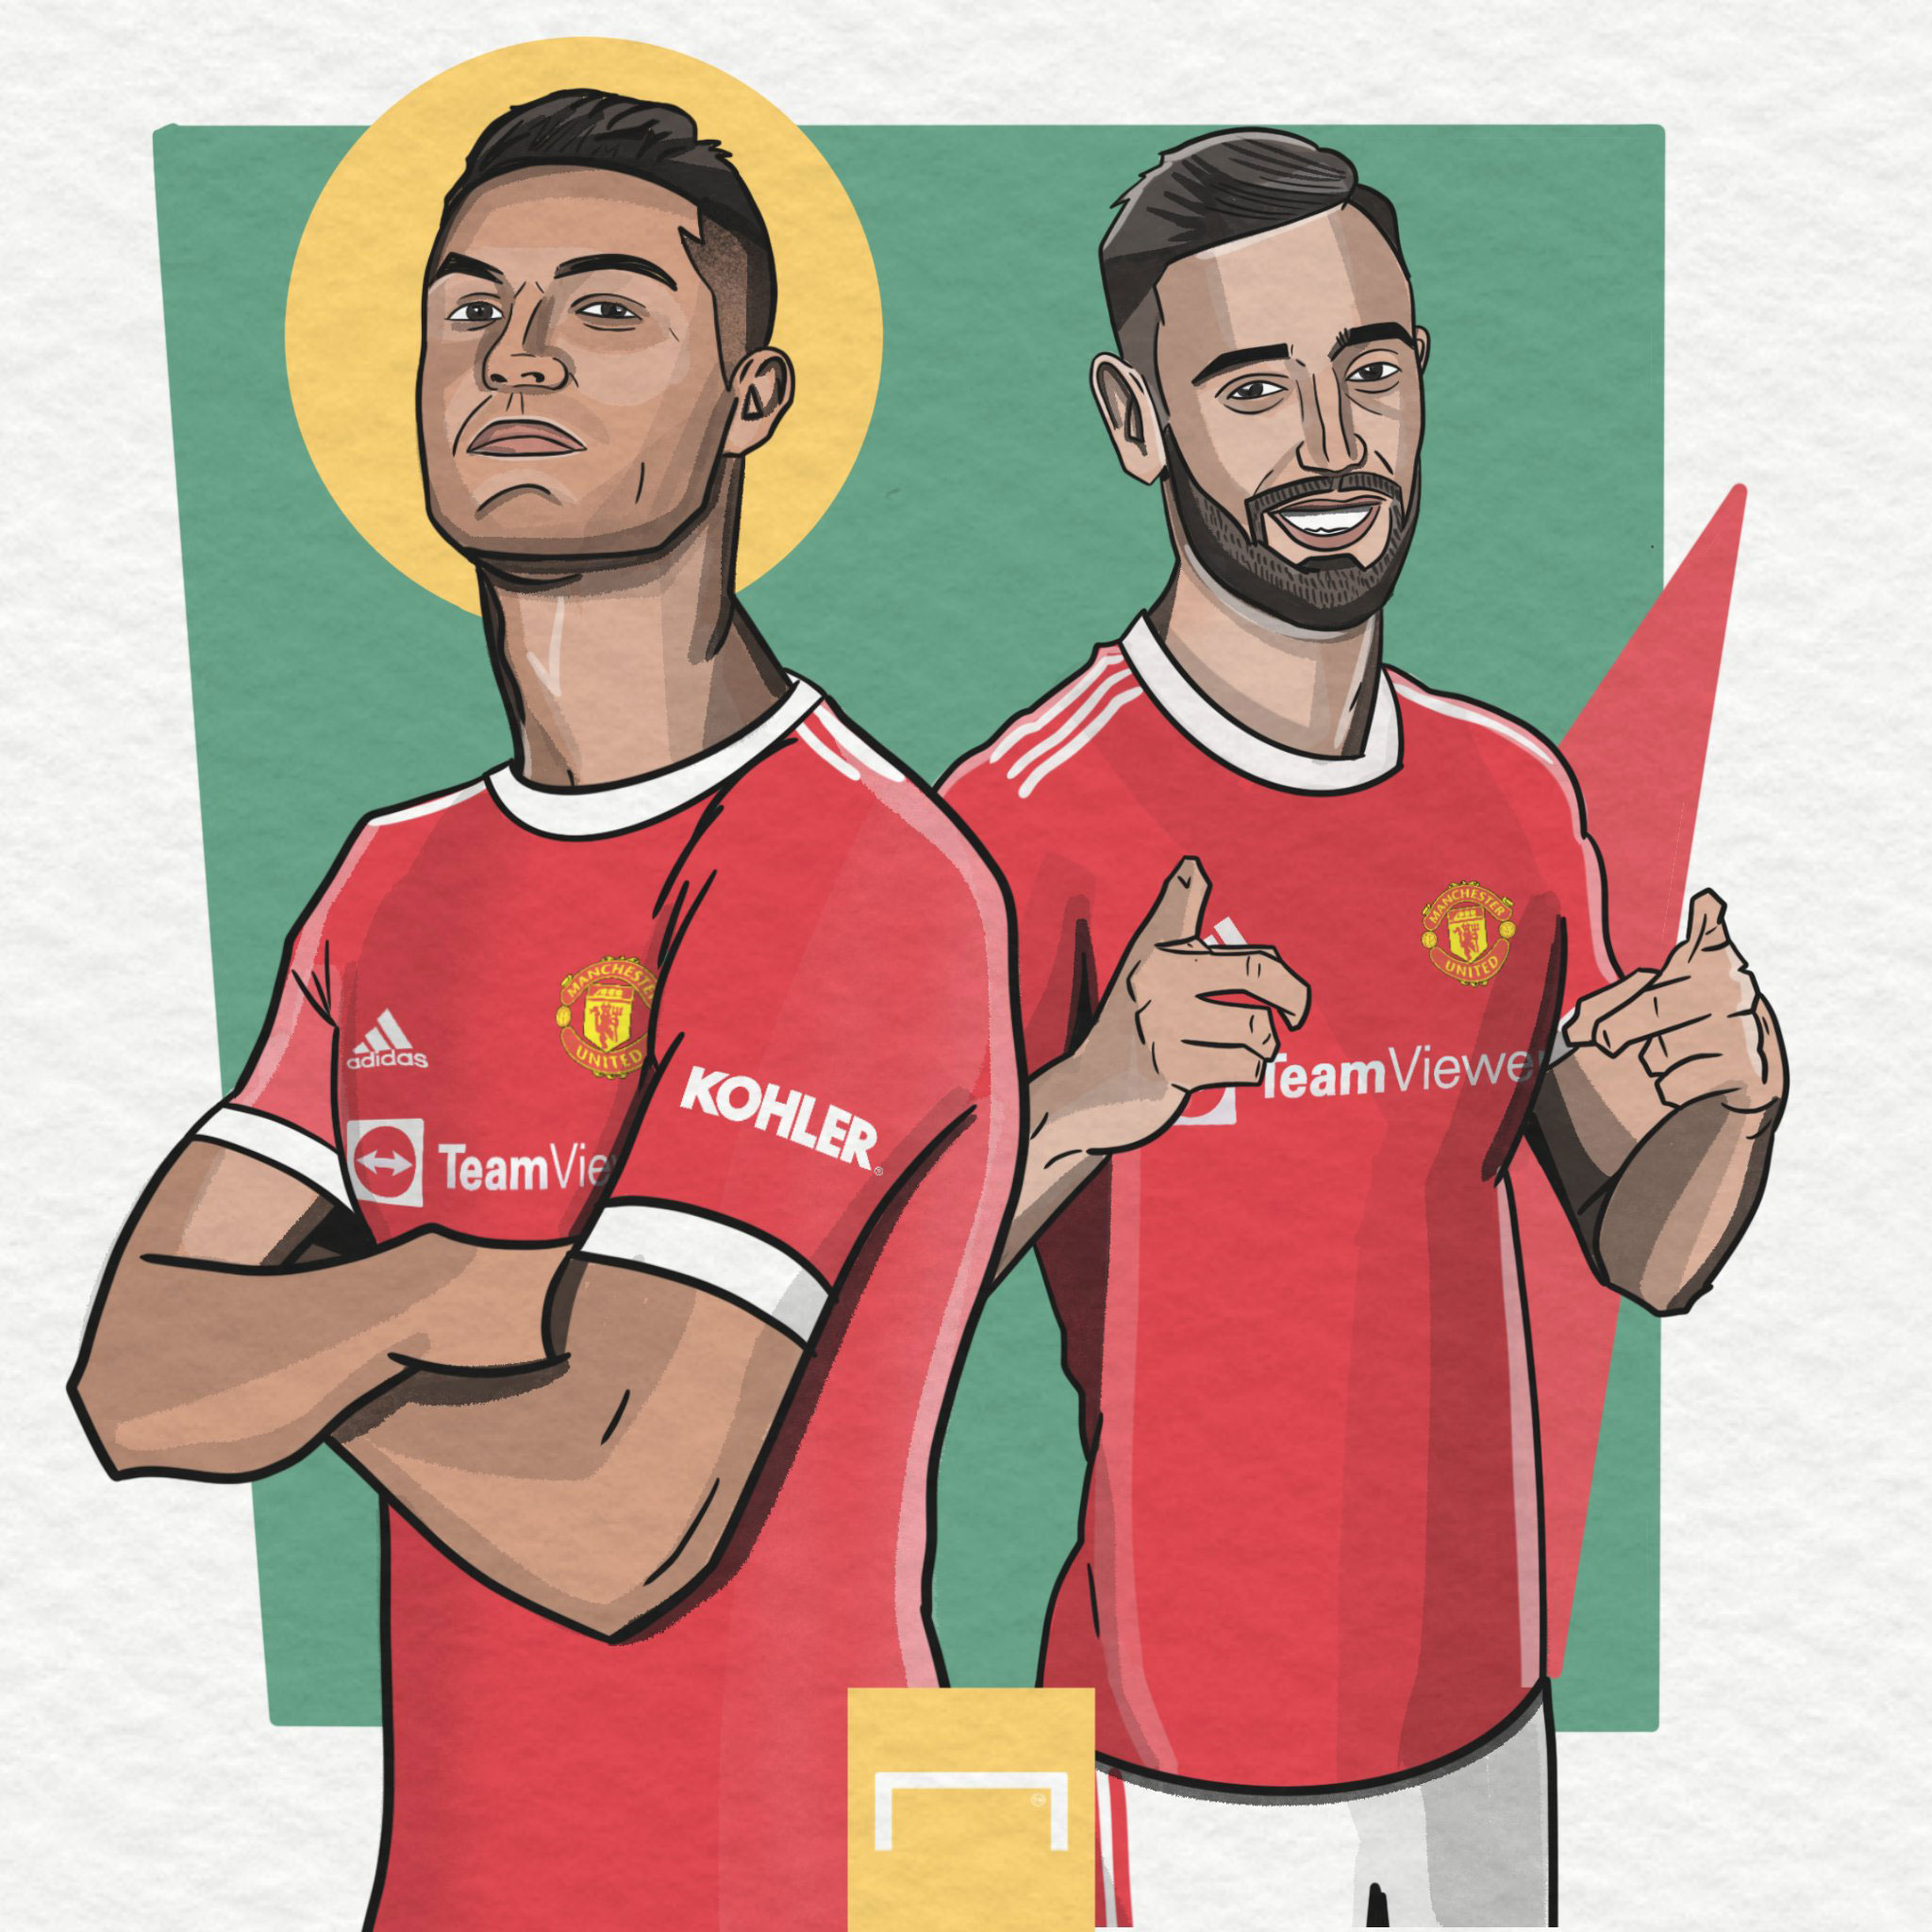 Ronaldo Manchester United Wallpaper 4k 2021 - Wallpaperforu